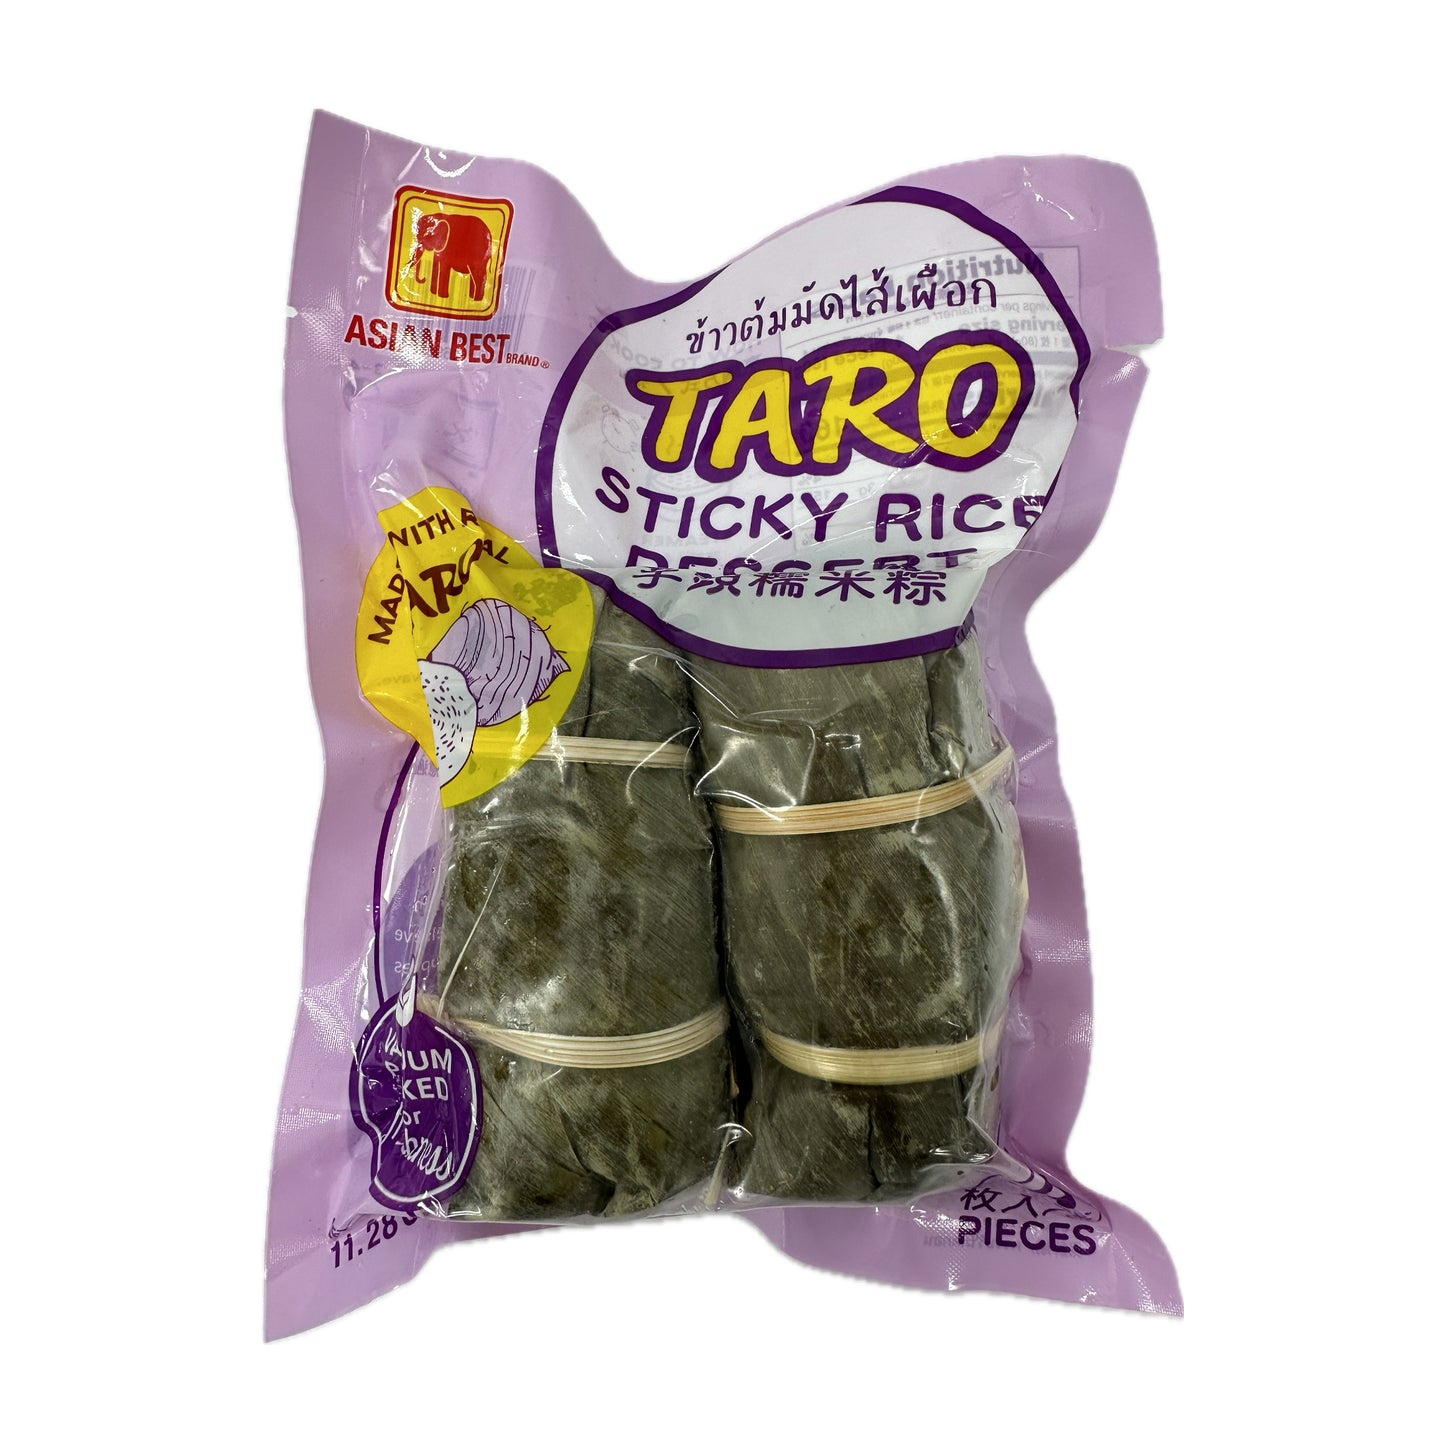 Frozen Banana Taro Sticky Rice (Khao Tom Mud) ข้าวต้มมัดไส้เผือก - 11.28 oz